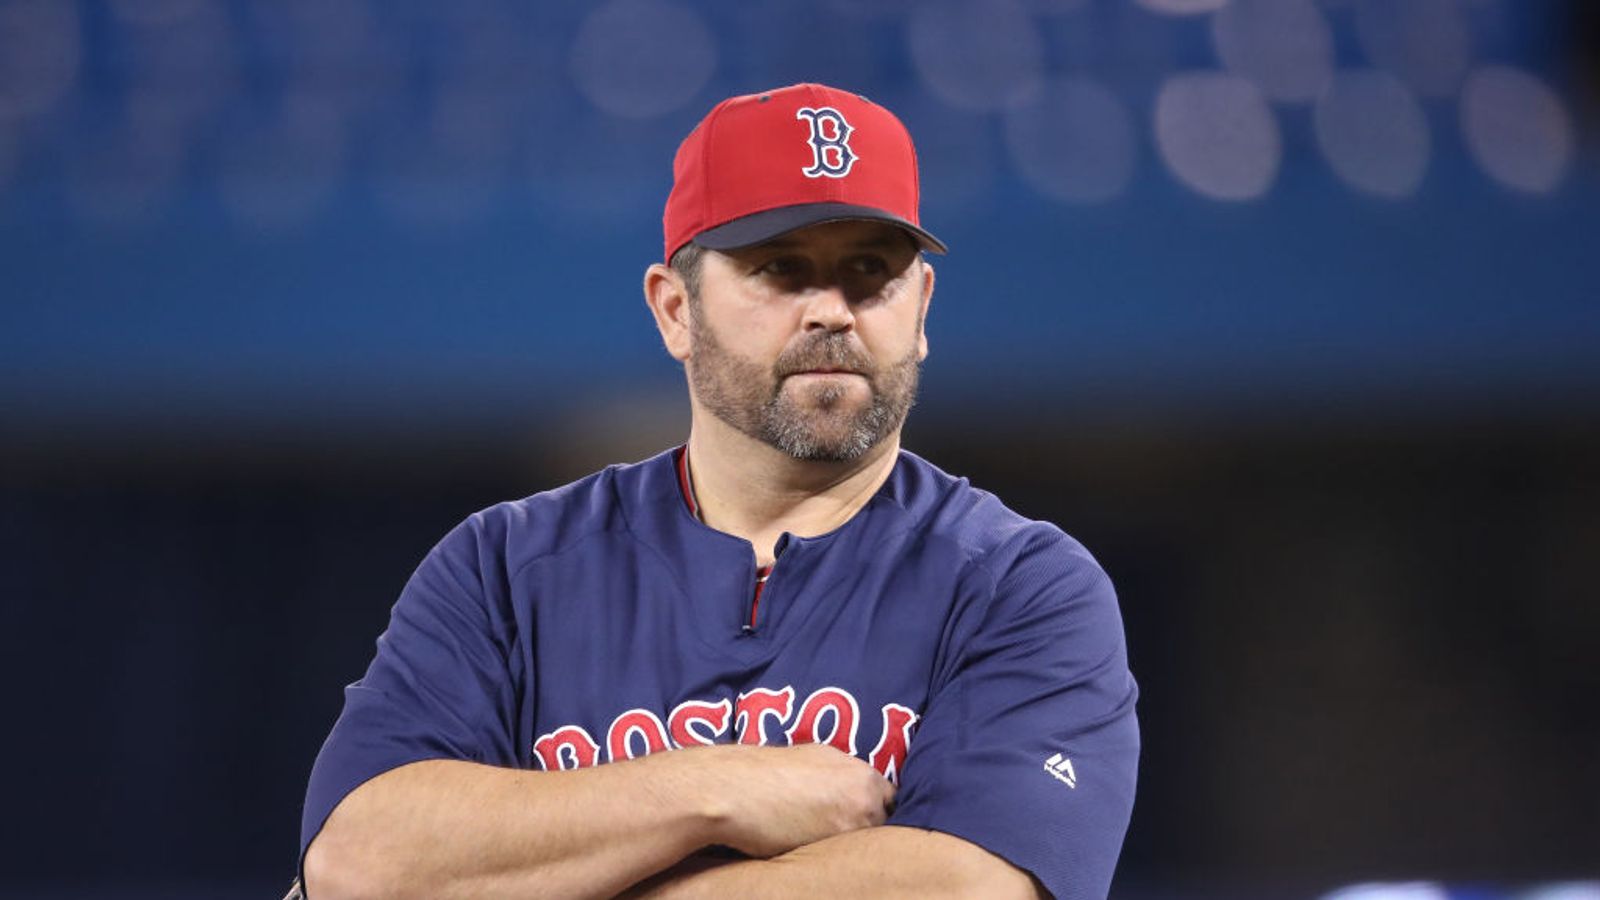 Red Sox name Jason Varitek to coaching staff for 2021 season - The